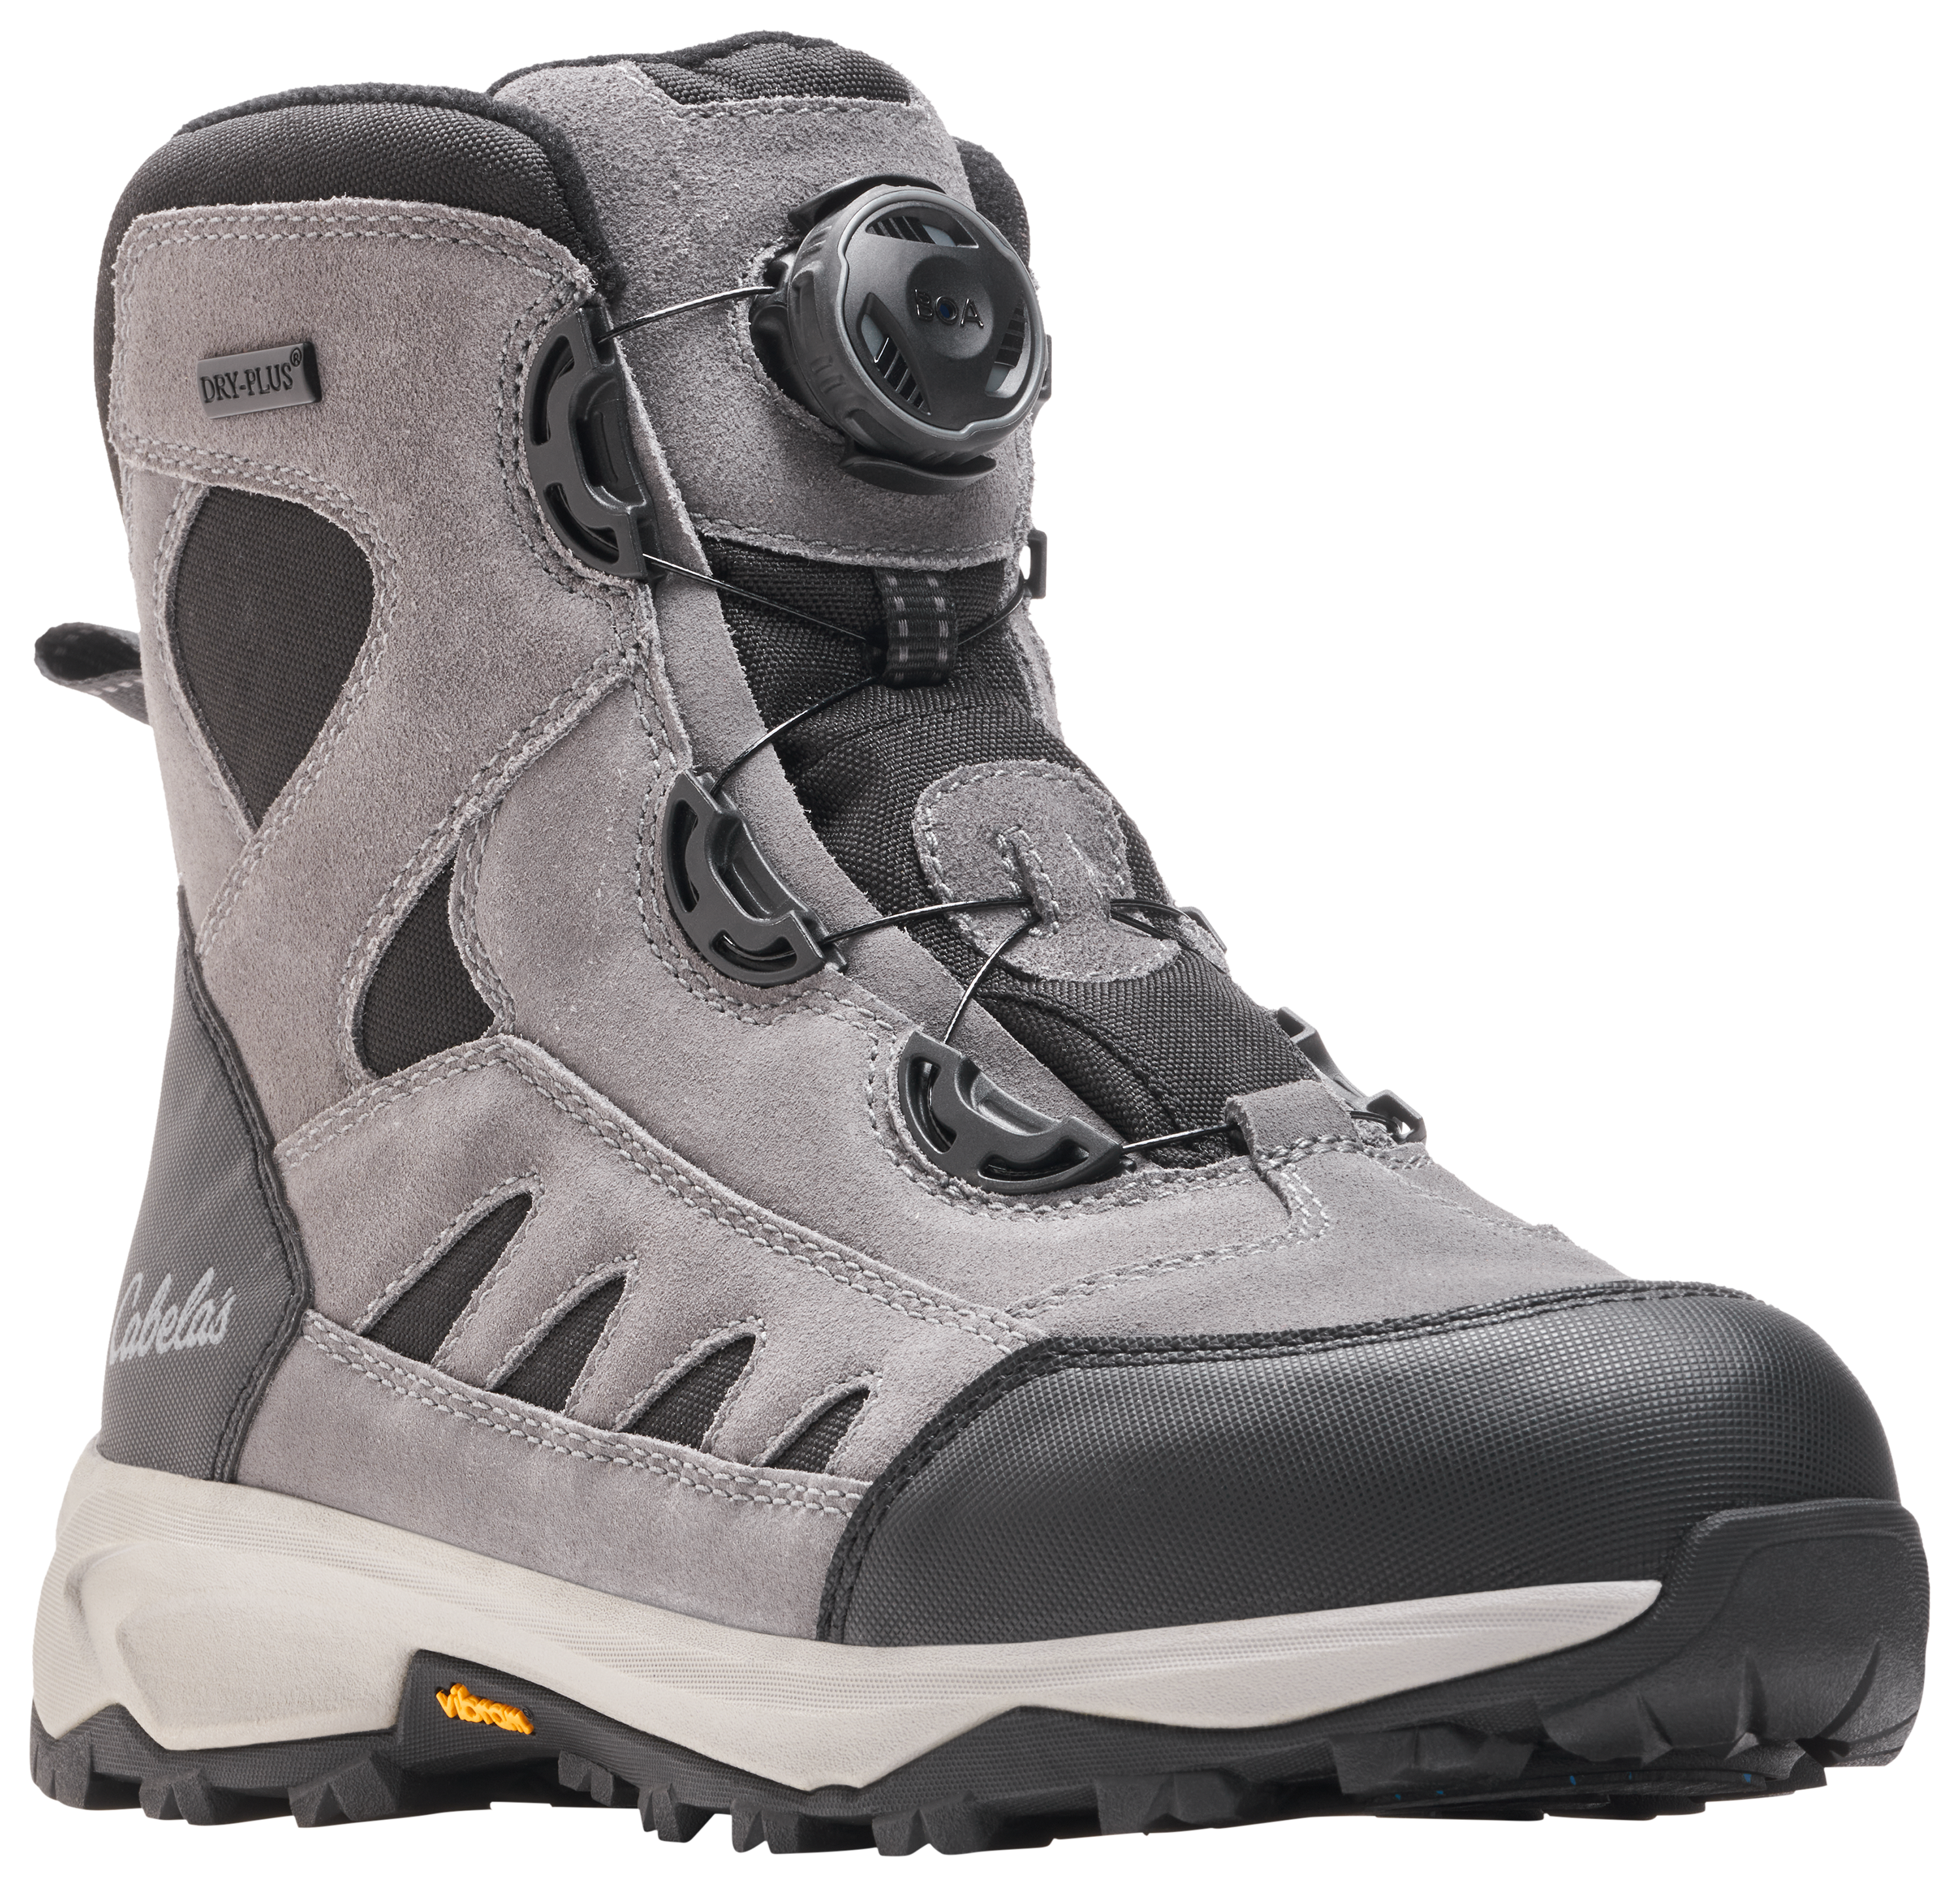 Cabela's Snow Runner Max 2.0 BOA Insulated Waterproof Winter Boots for Men - Granite Gray - 11.5M